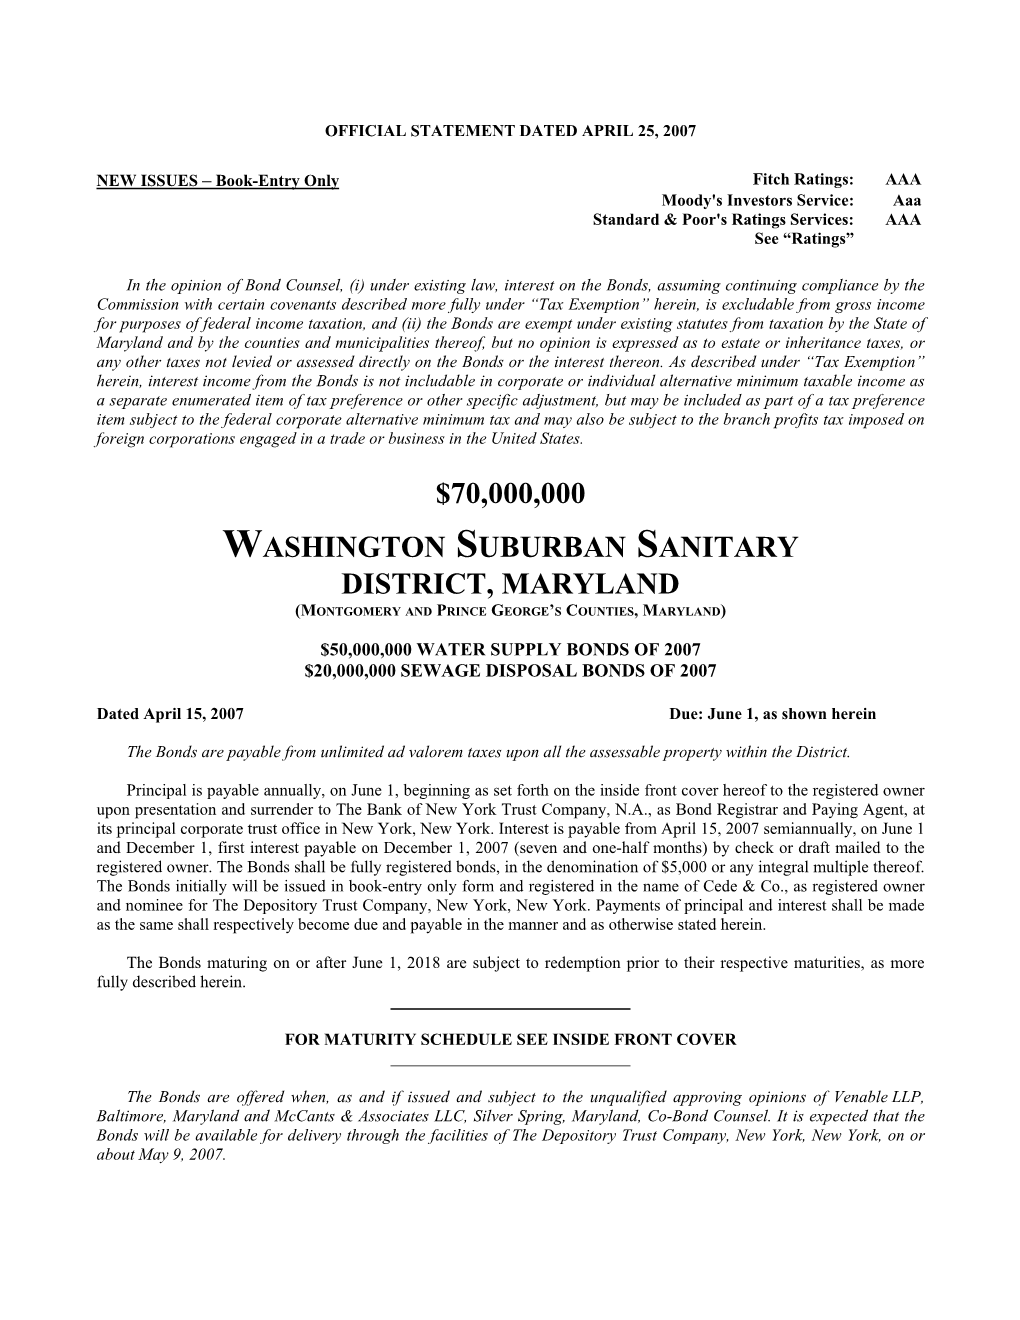 70000000 Washington Suburban Sanitary District, Maryland